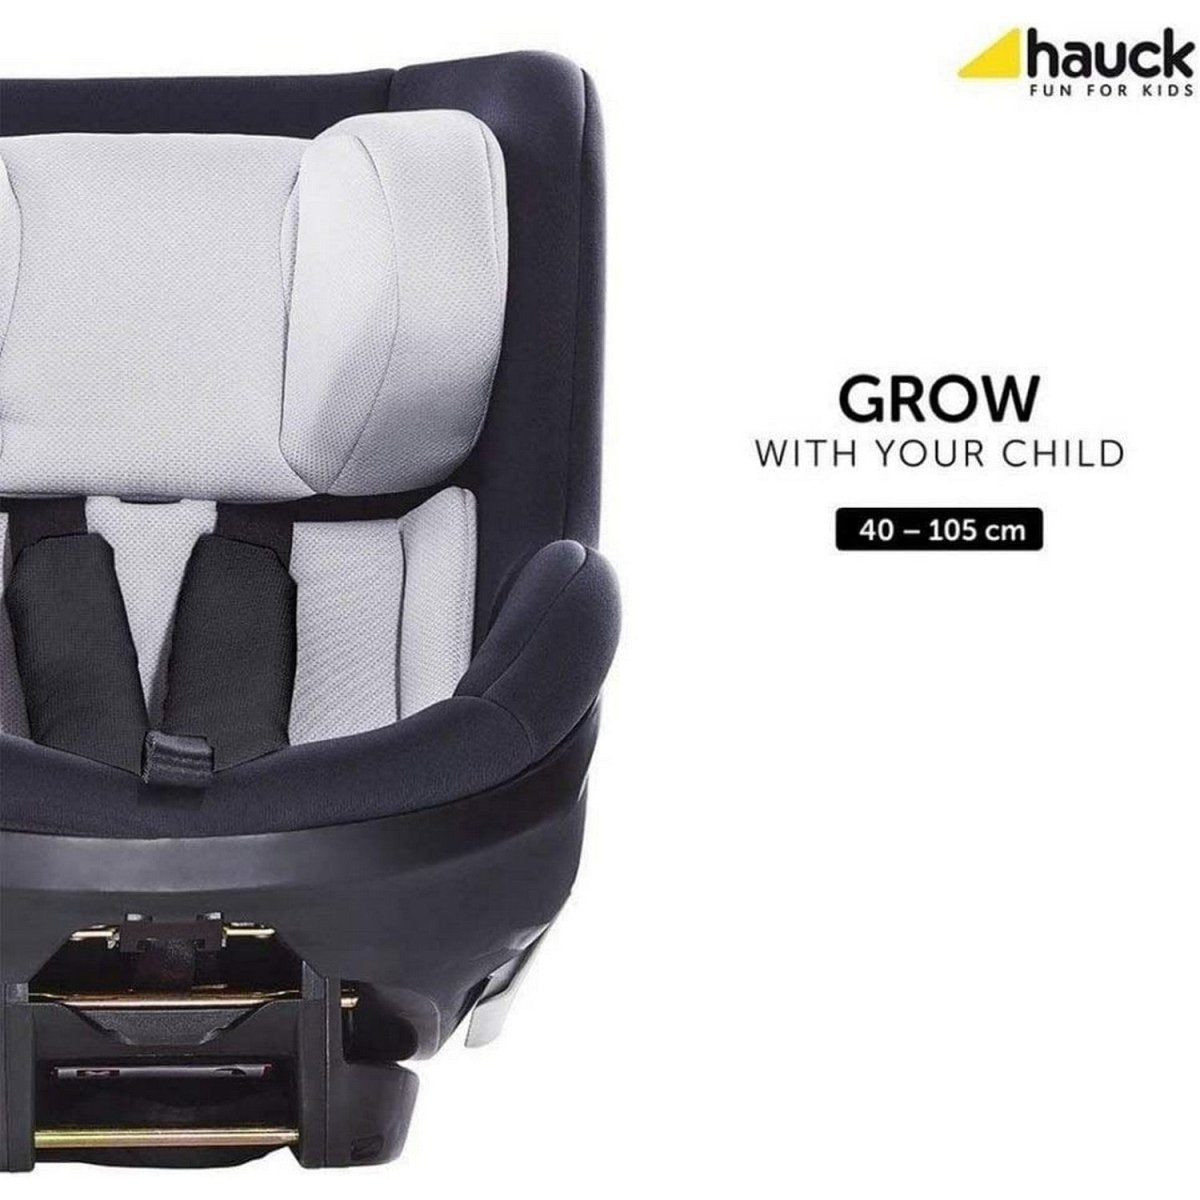 Hauck Ipro Kids Convertible Car Seat- Lunar - 614181